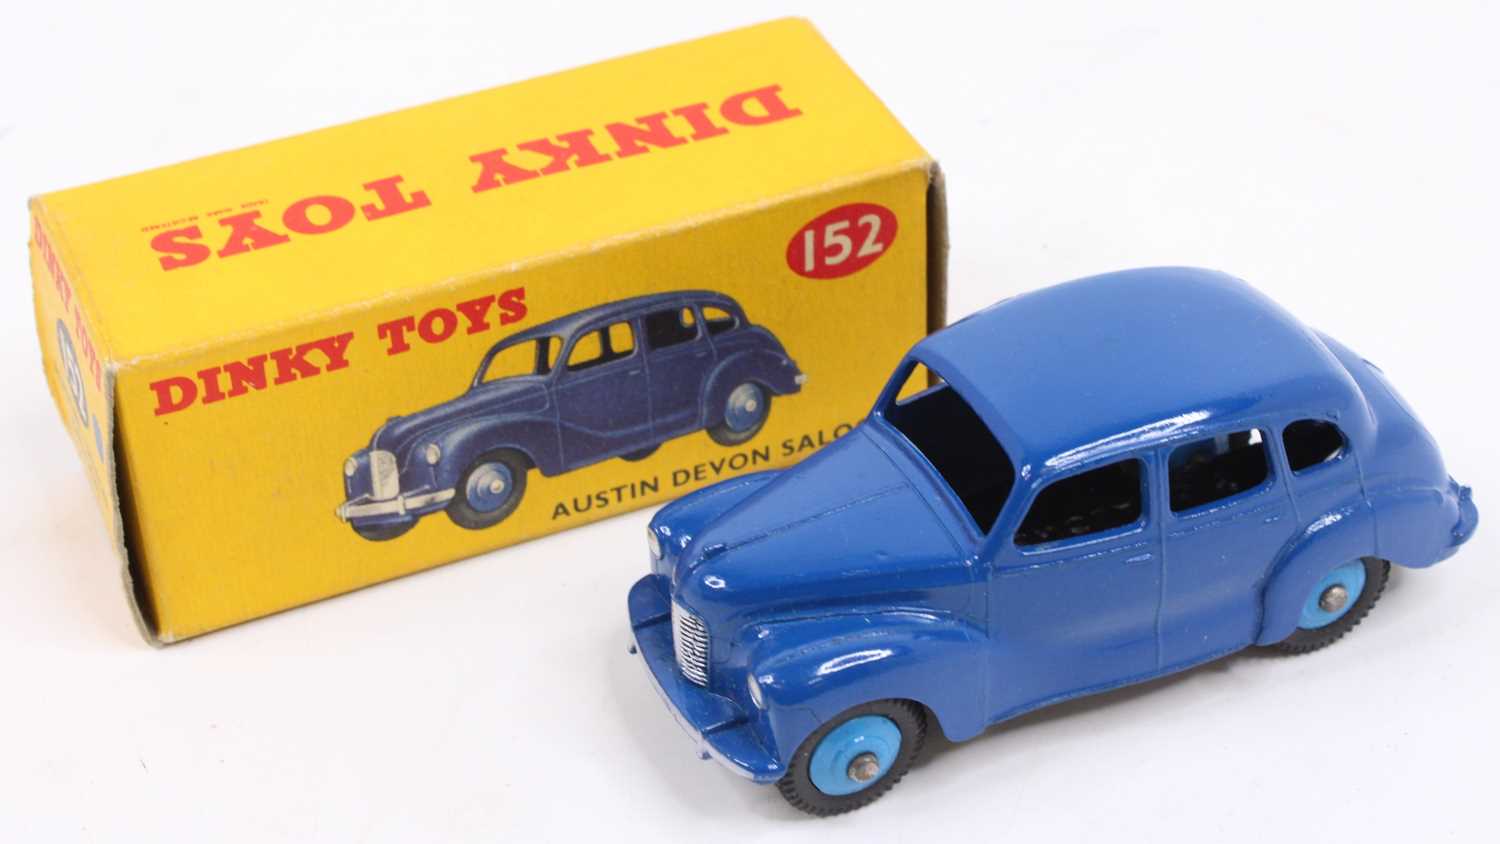 Dinky Toys No. 152 Austin Devon Saloon, with a dark blue body, light blue ridged hubs, tinplate